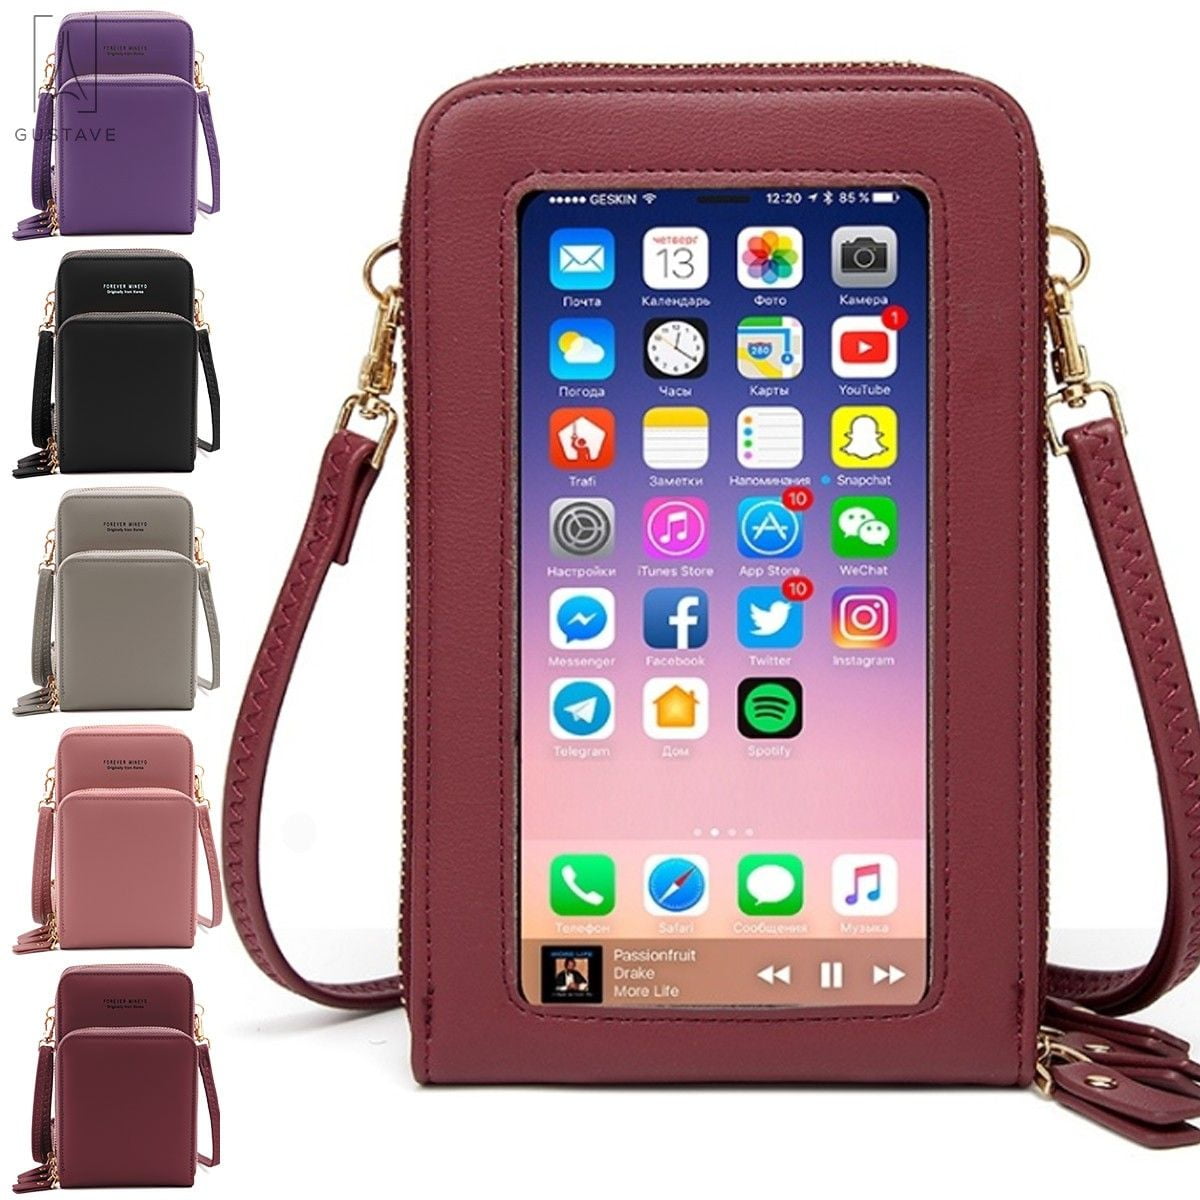 12 Crossbody Phone Bags to Shop This Season